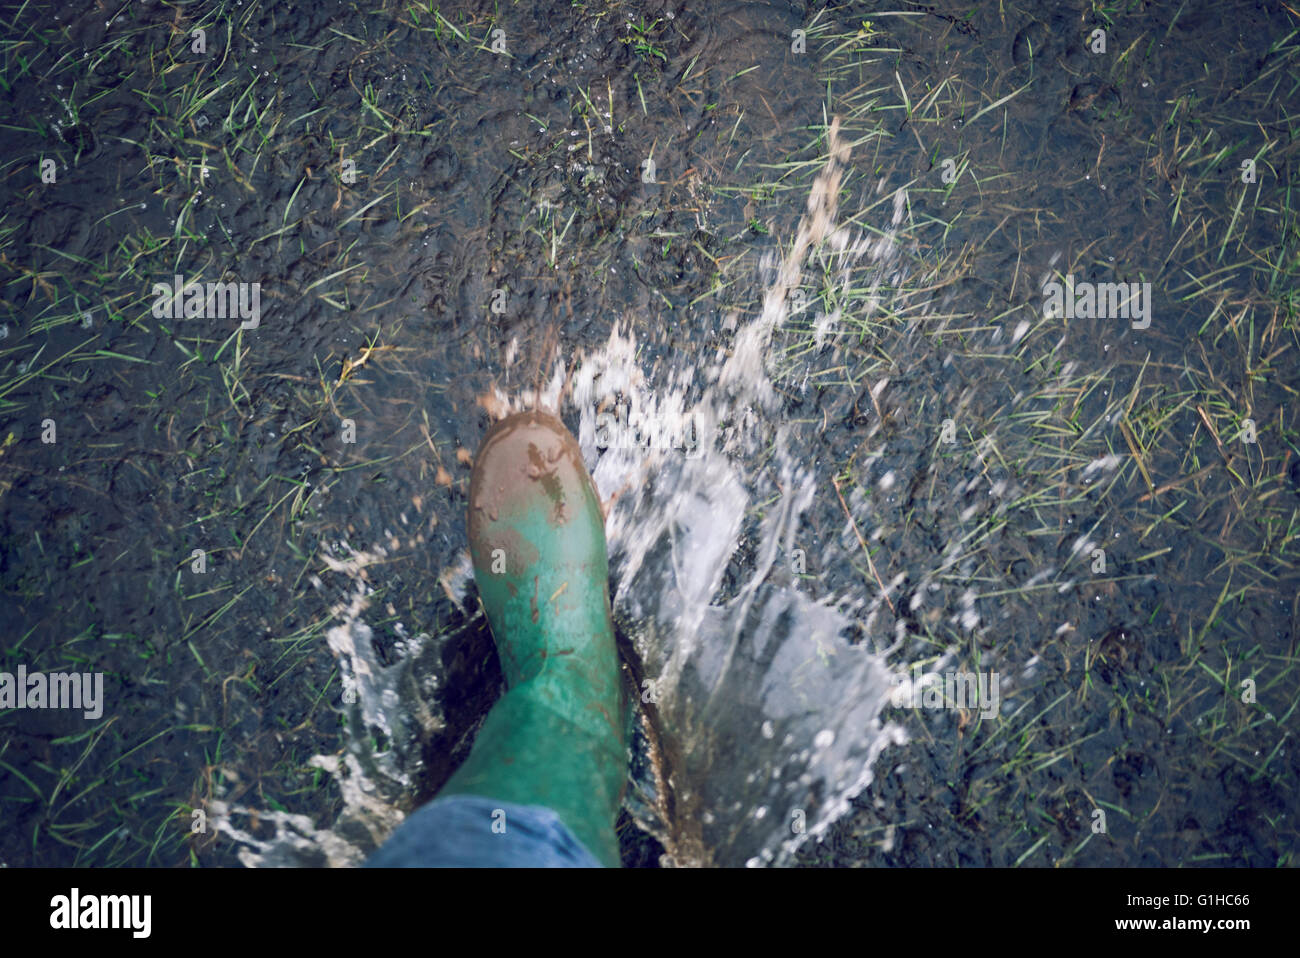 Welly boots - Enjoying wet weather Stock Photo